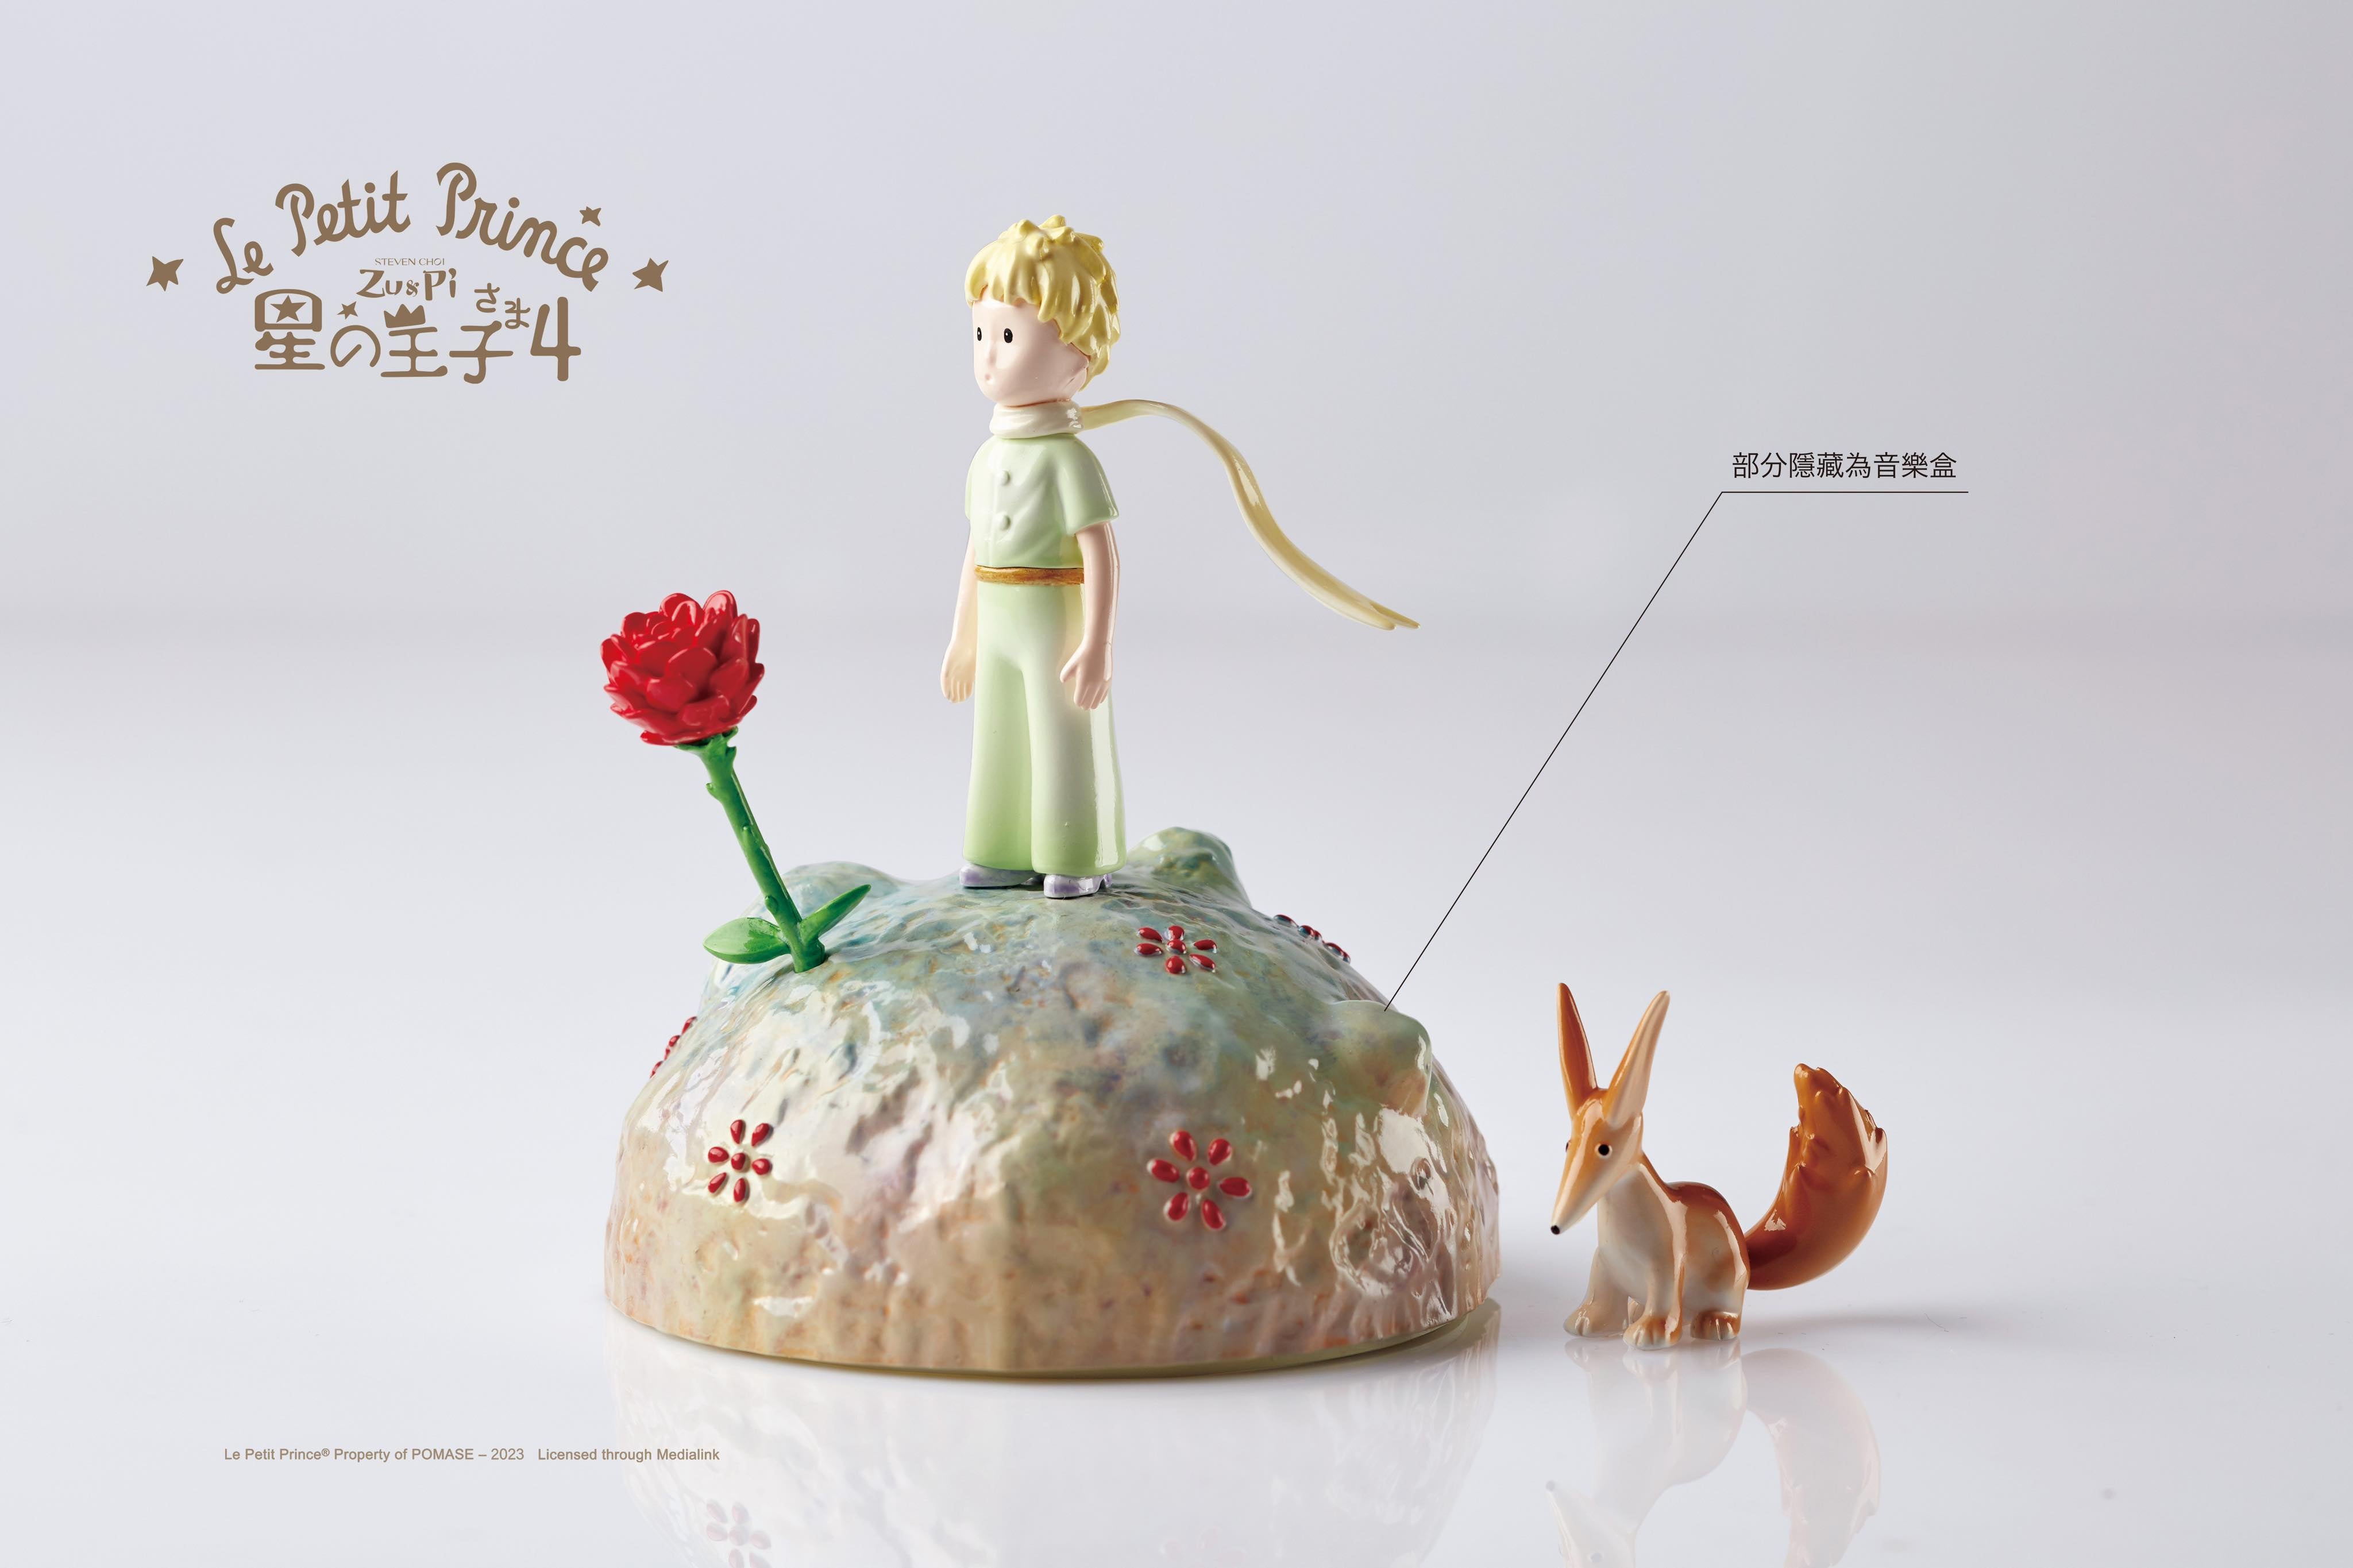 Little Prince Blind Box Series 4 by Zu & Pi